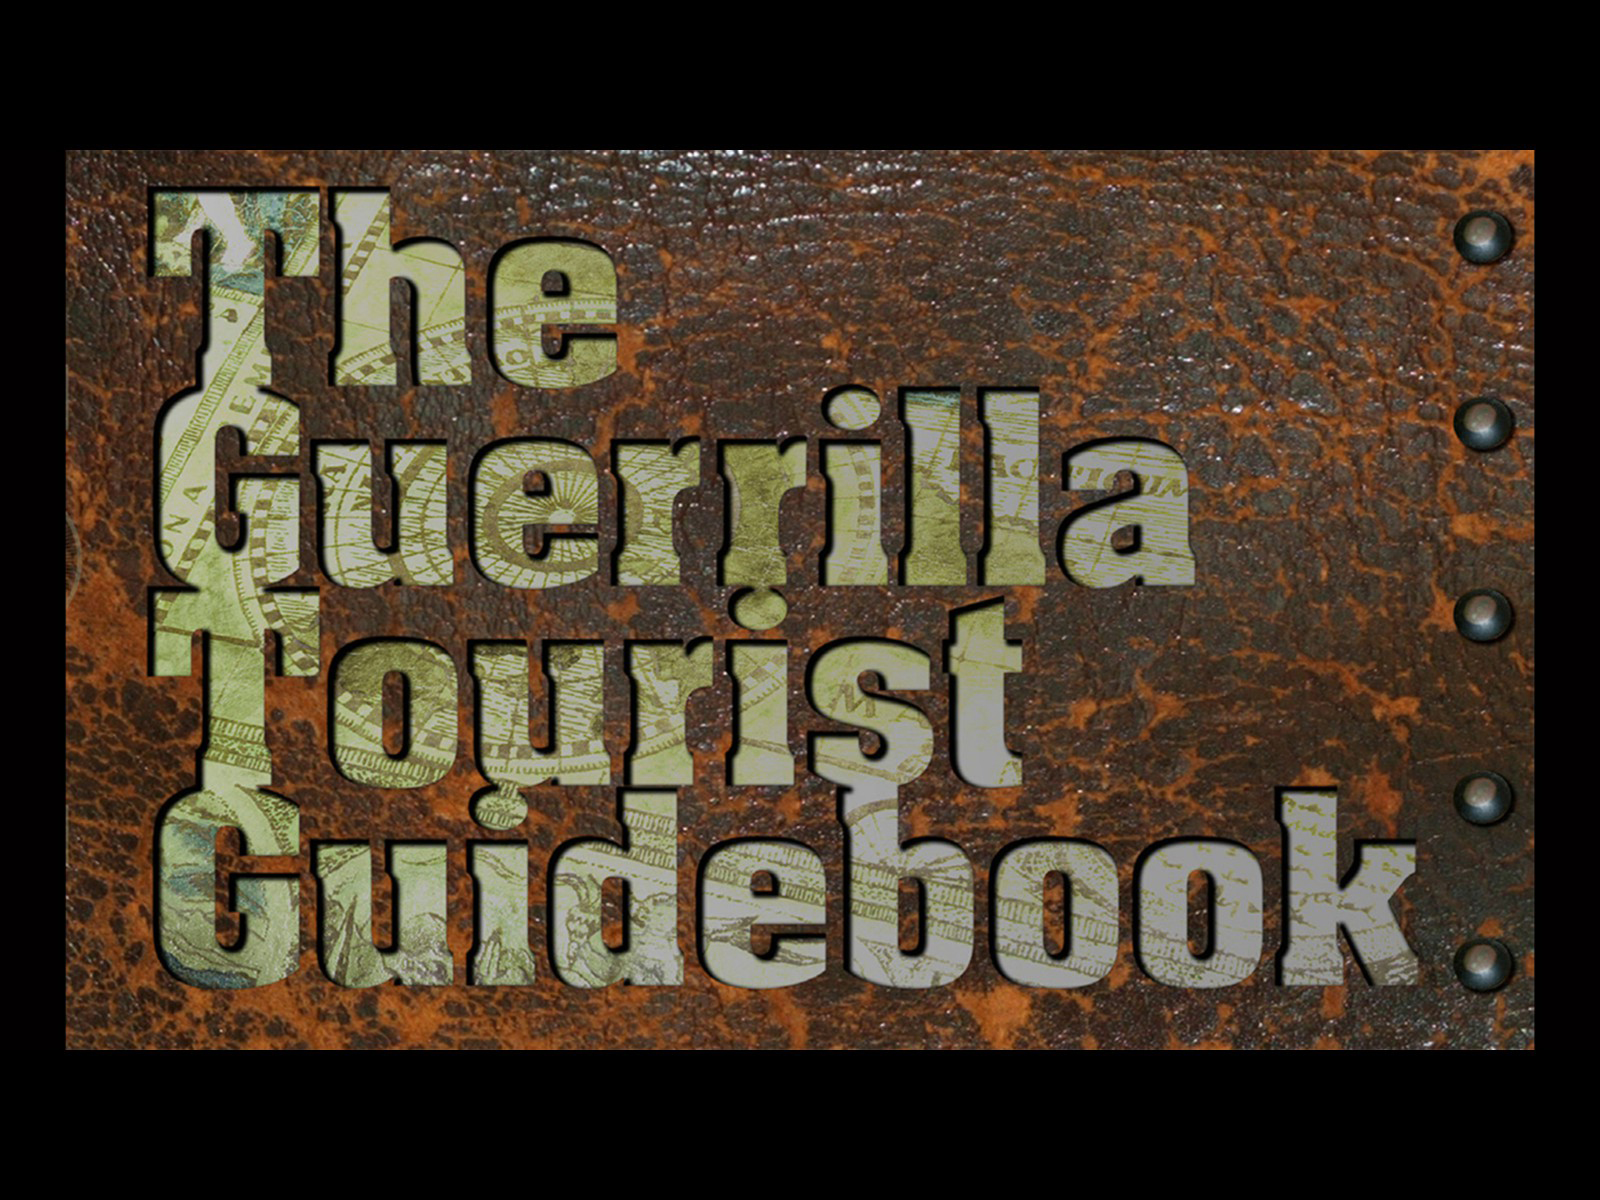 Guerrilla Tourist Guidebook